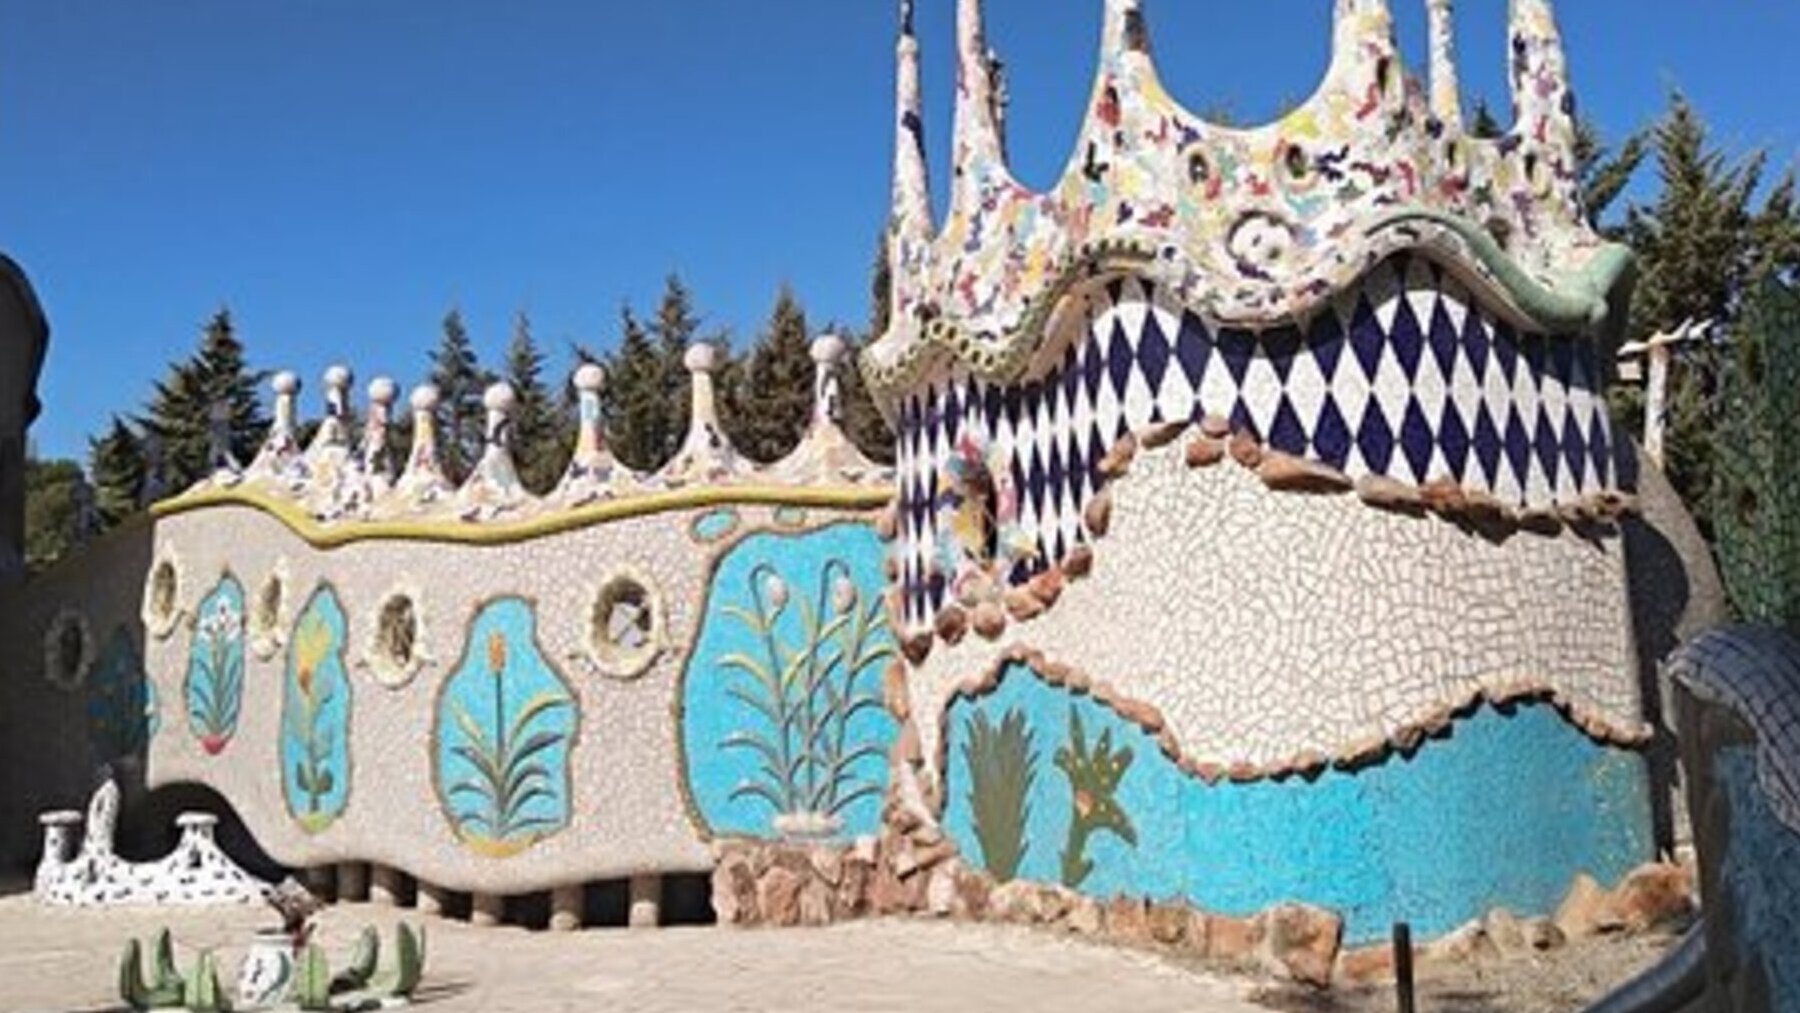 El asombroso castillo de España construido por un albañil que podría ser de Gaudí